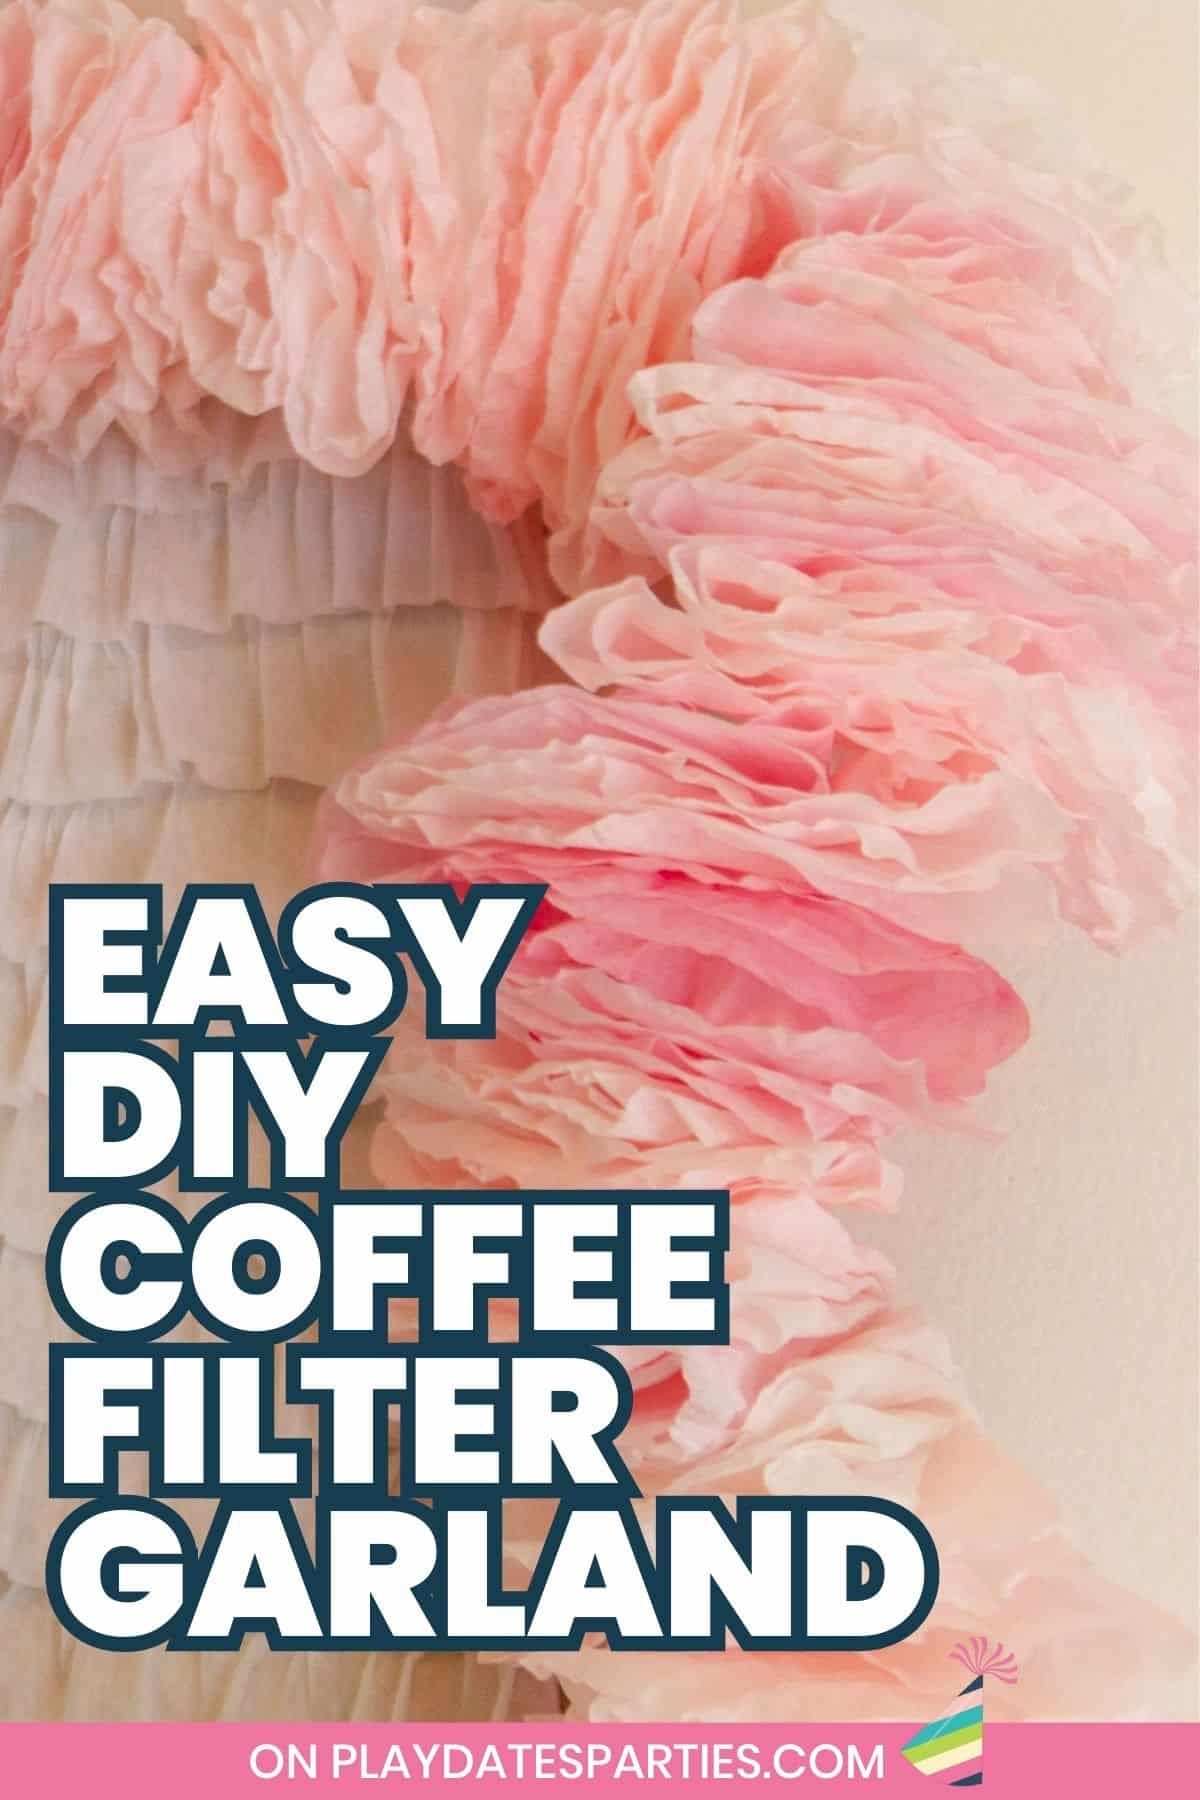 Easy DIY Coffee Filter Garland Pin Image.